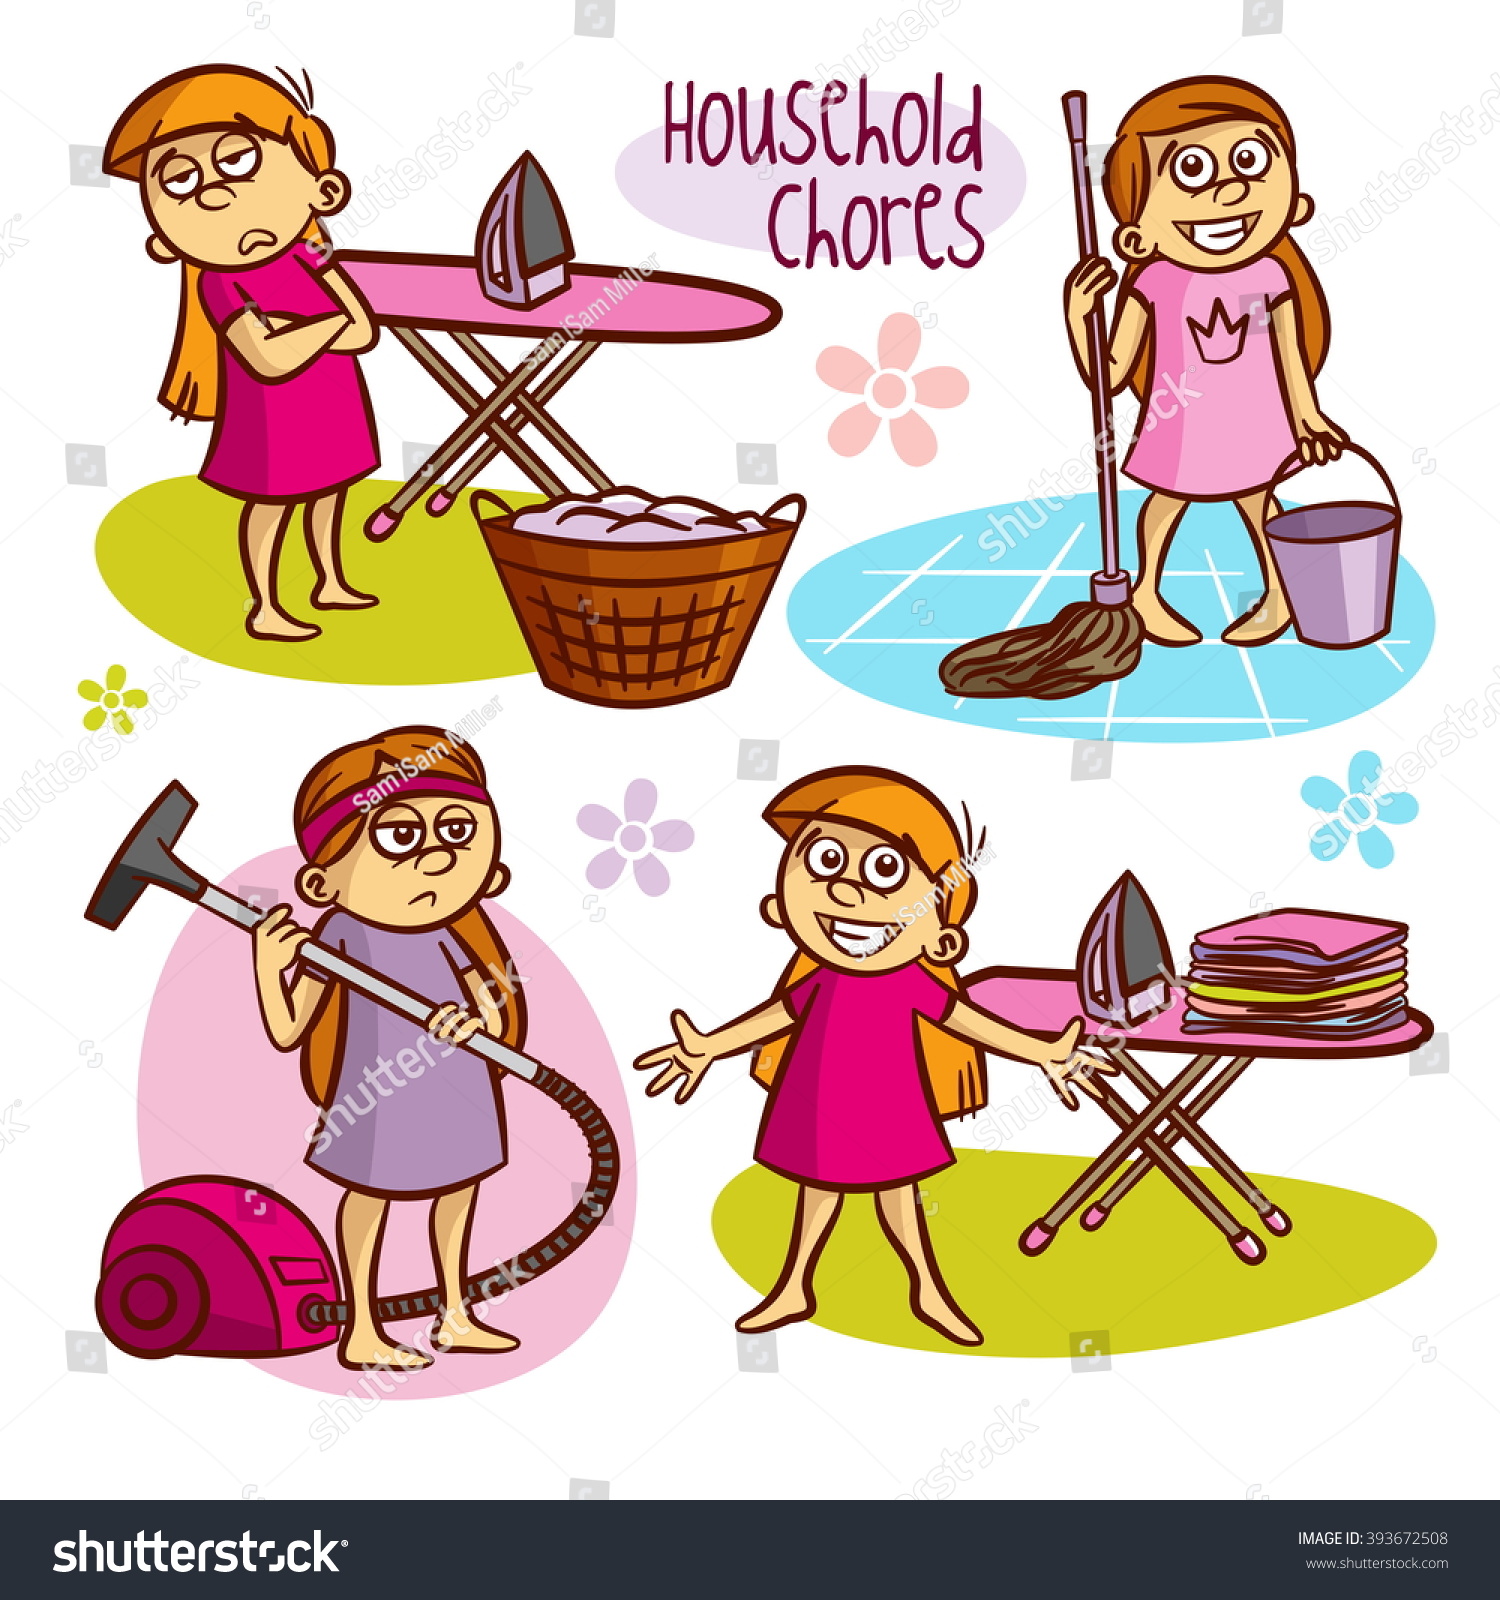 free clip art household chores - photo #47